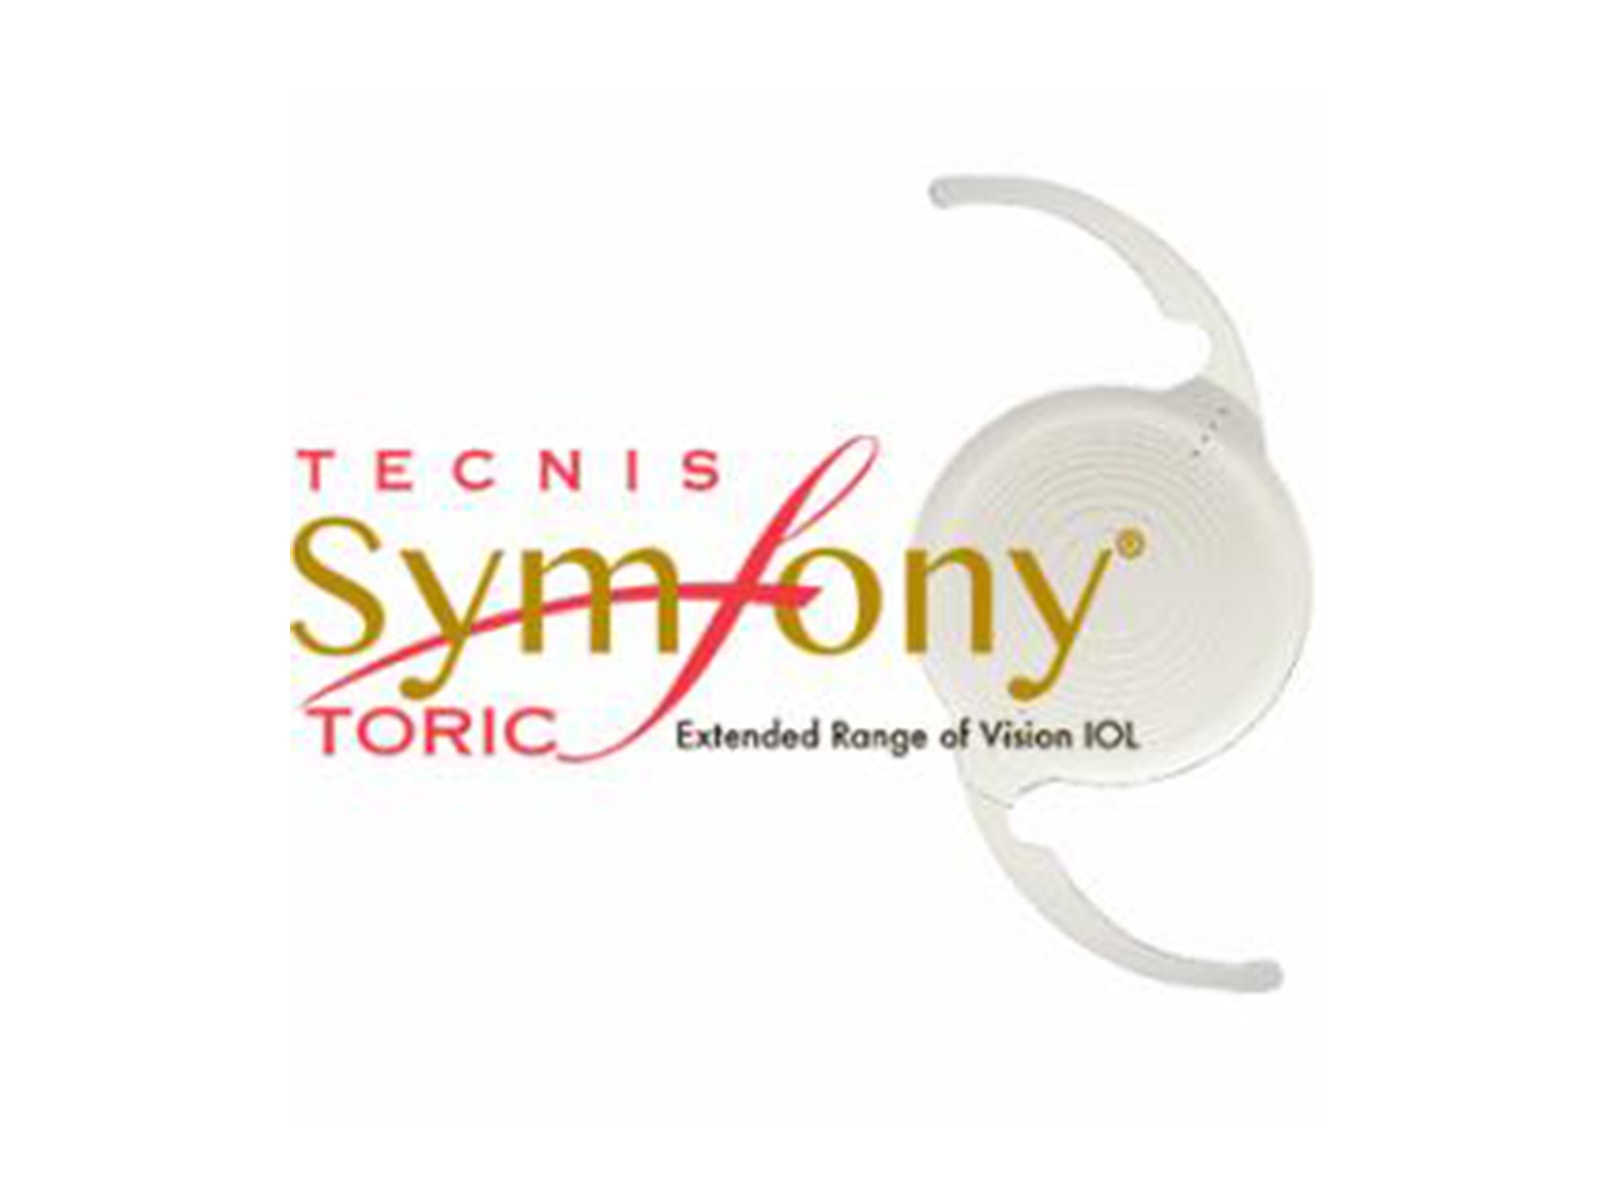 TECNIS Symfony Toric IOL